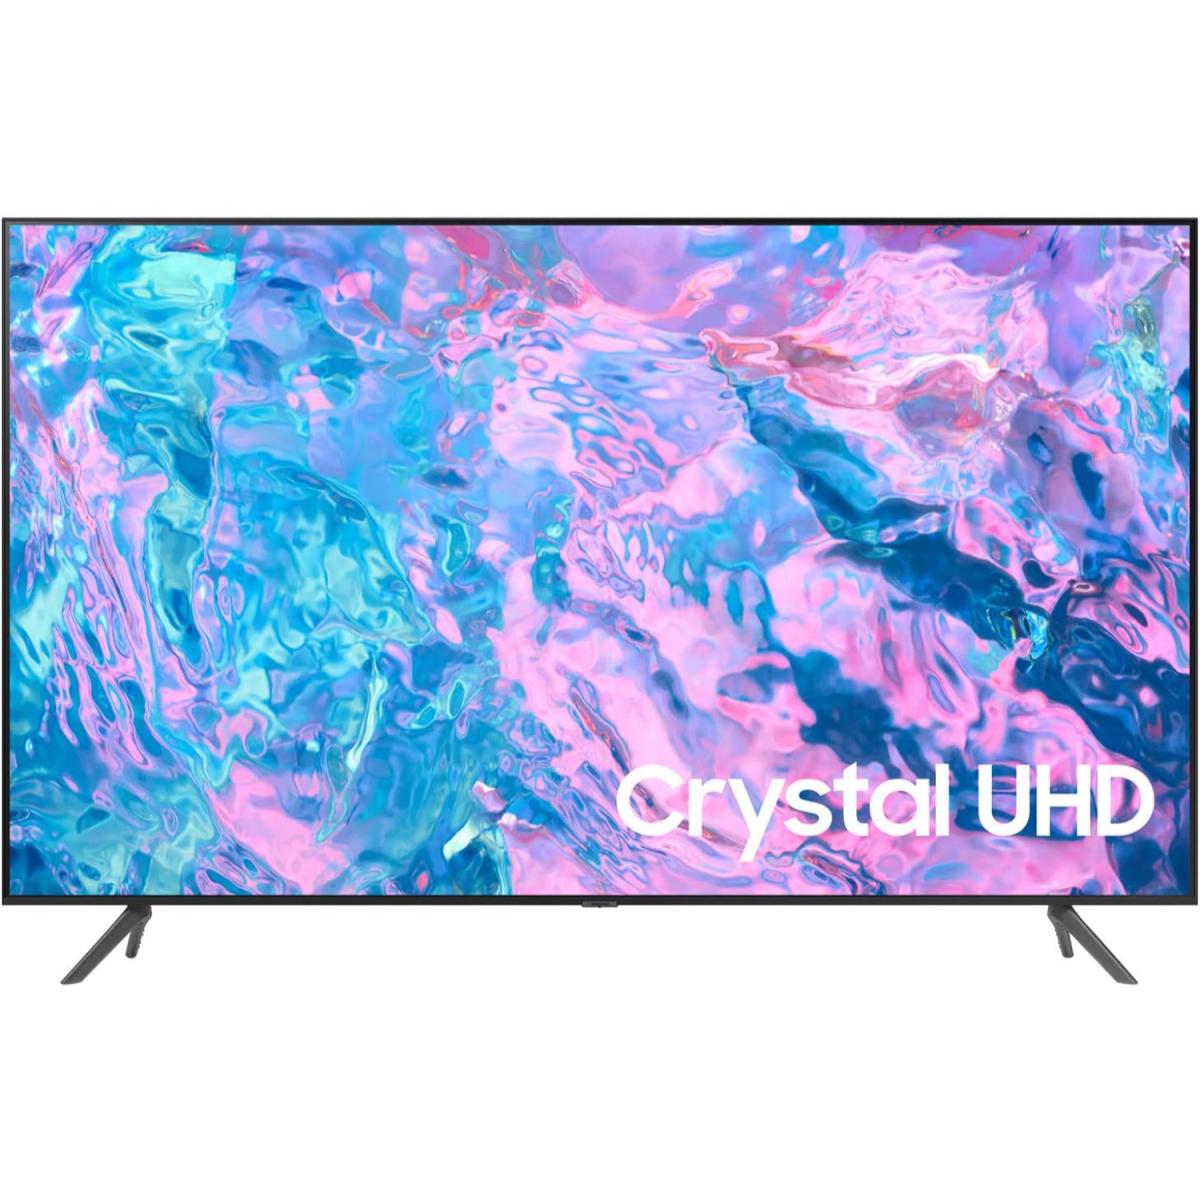 TV SAMSUNG LED 75" SMART CRYSTAL UHD